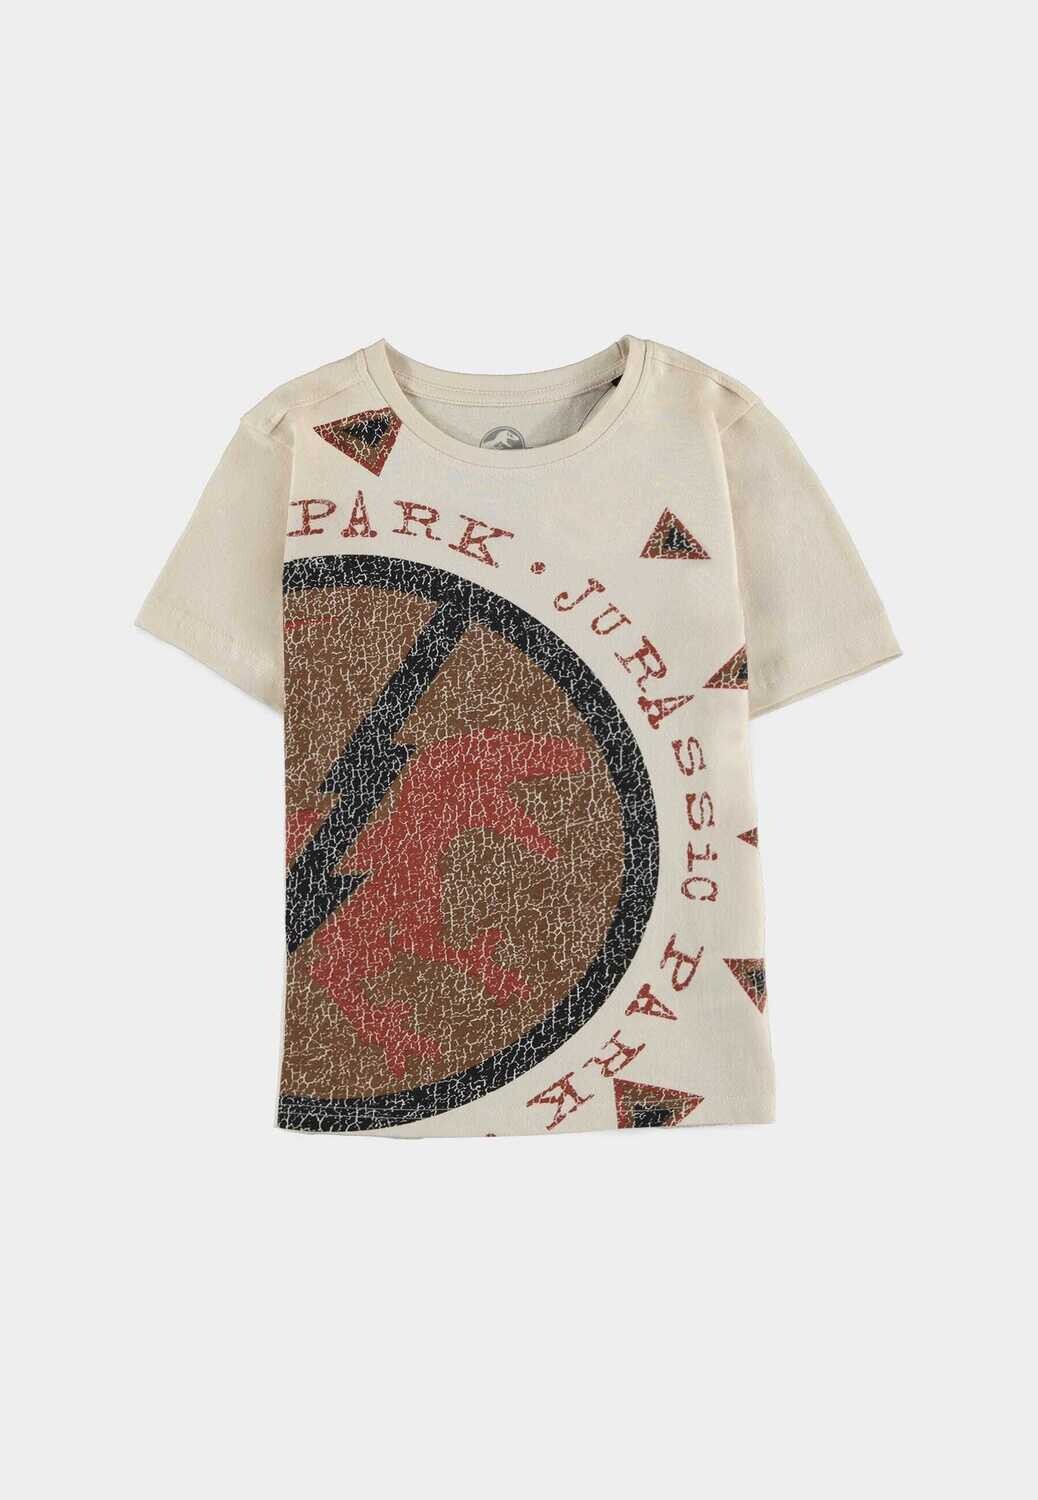 Universal - Jurassic Park - Boys Short Sleeved T-shirt